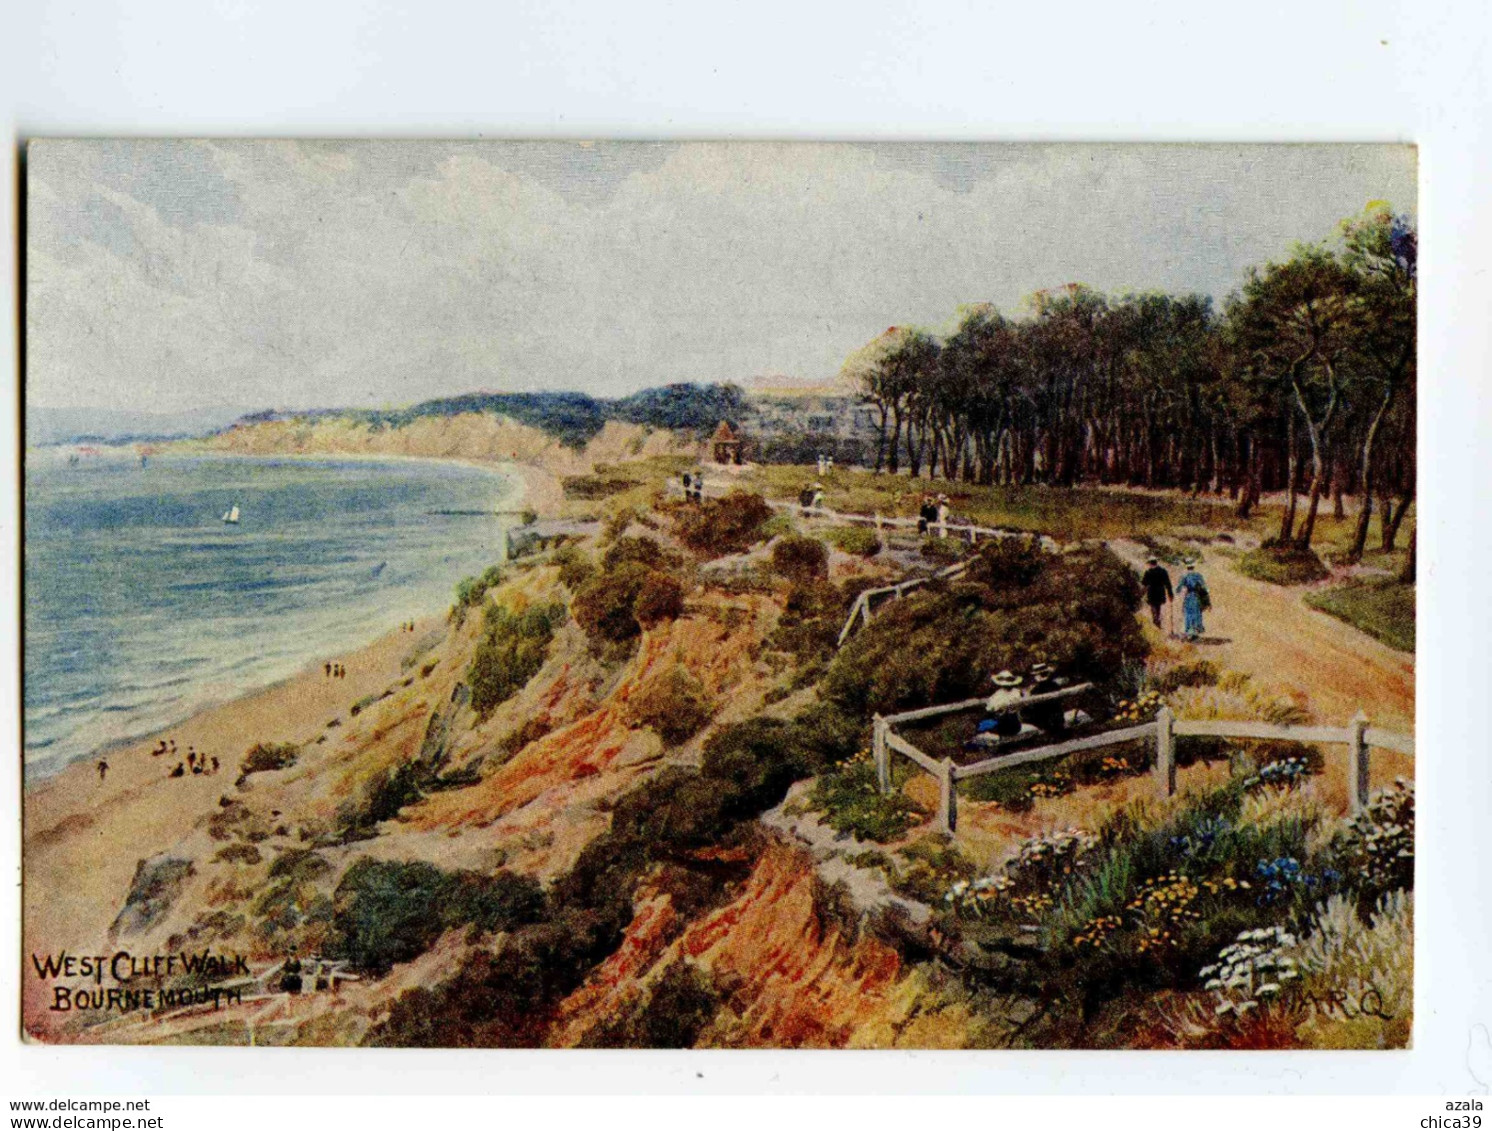 A 18893   -   AR. Quinton  -  Bournemouth  -  West Clife Walk - Quinton, AR